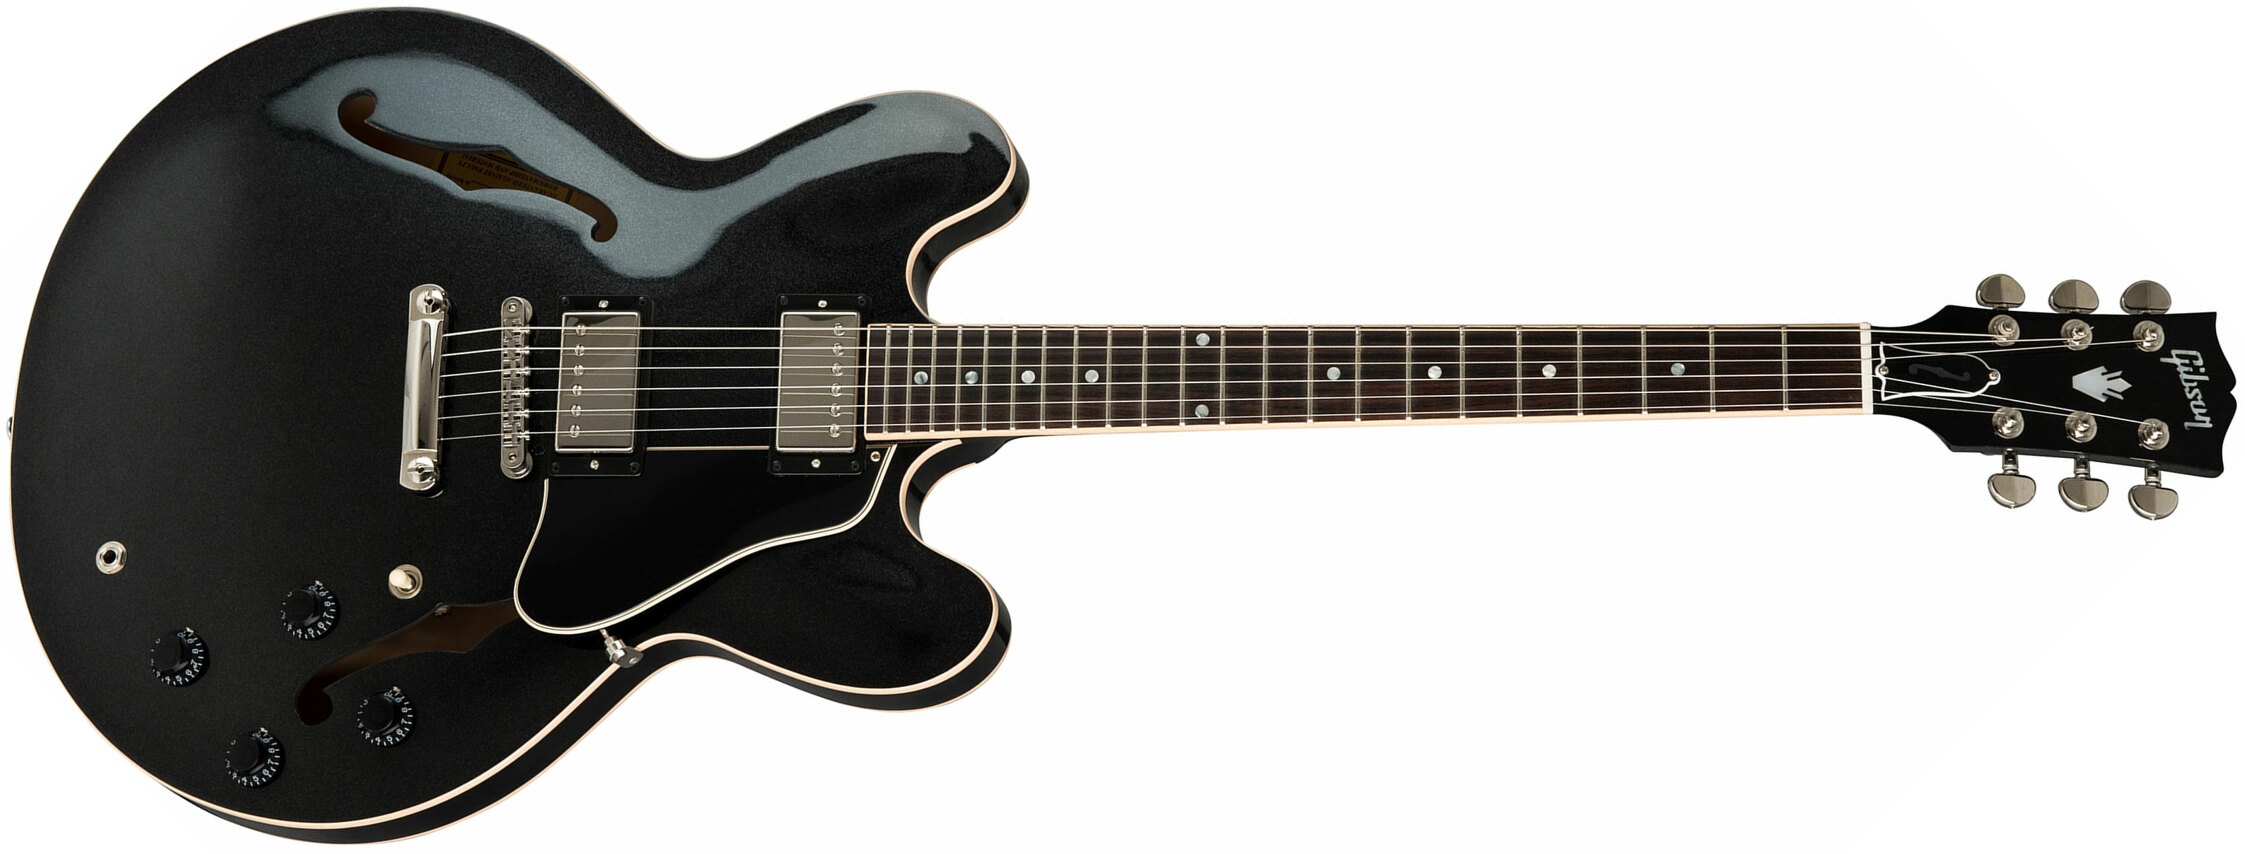 Gibson Es-335 Dot 2019 Hh Ht Rw - Graphite Metallic - Semi-hollow electric guitar - Main picture